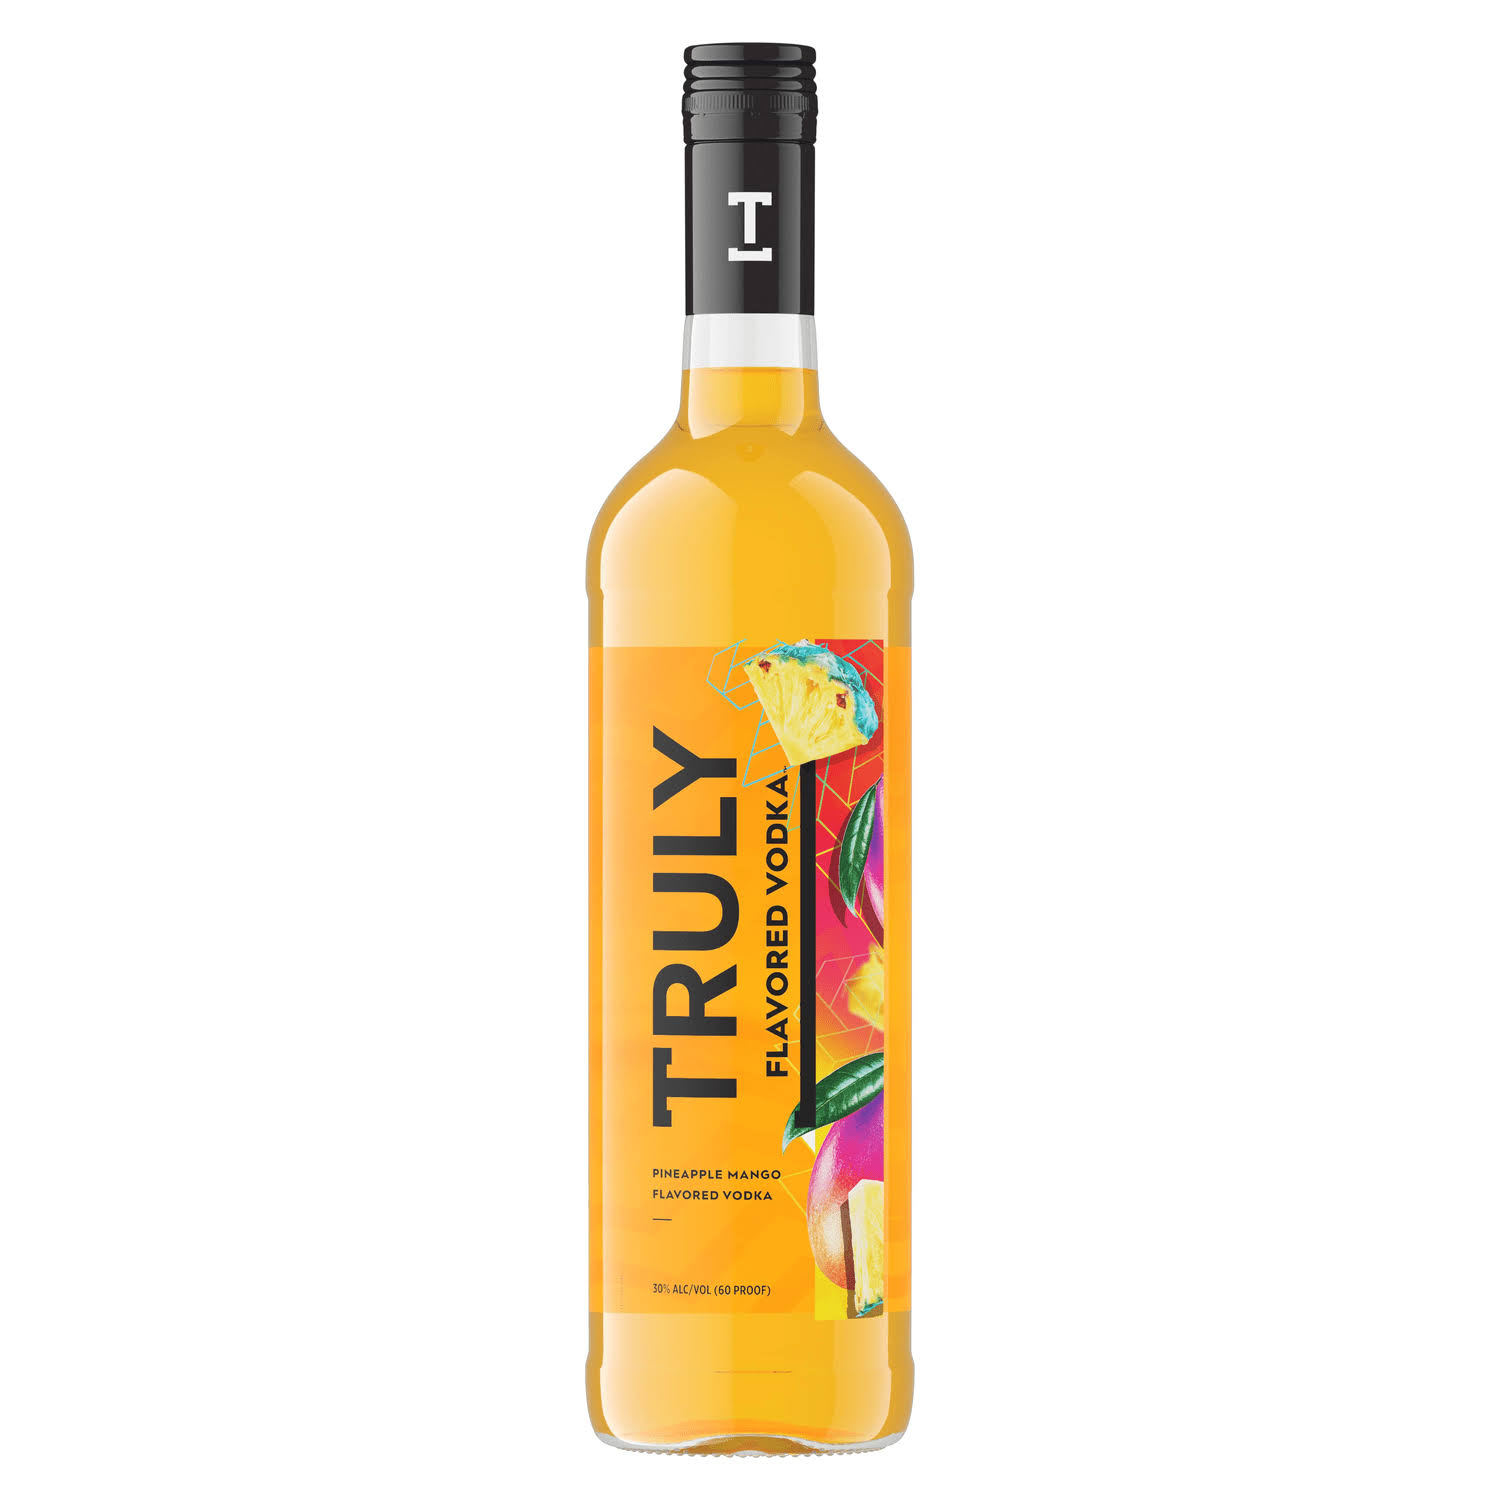 Truly Vodka, Pineapple Mango Flavored - 750 ml